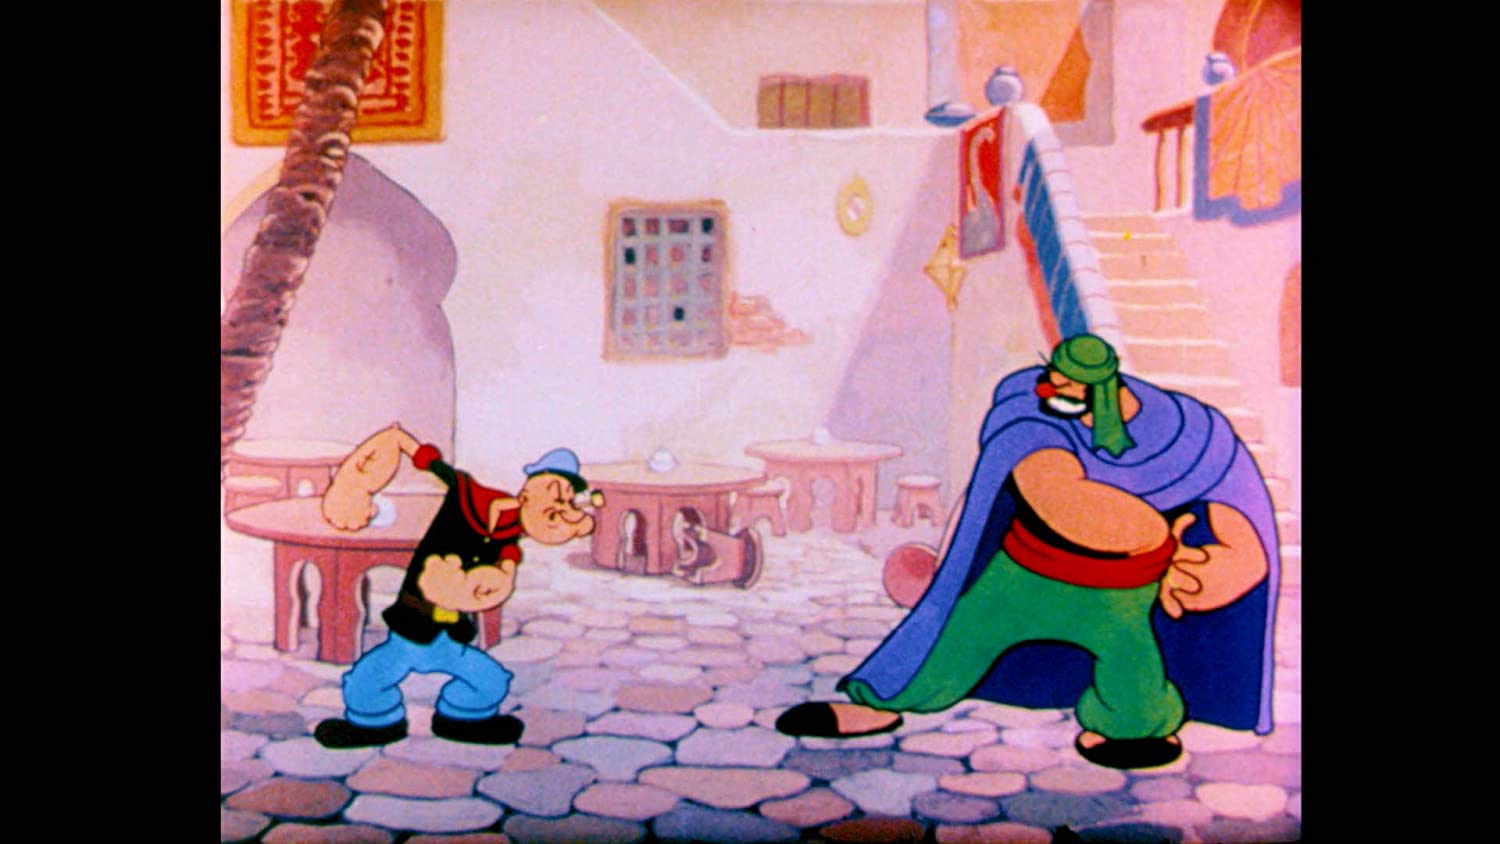 Popeye Original Classics In Technicolor – Thunderbean Animation Shop